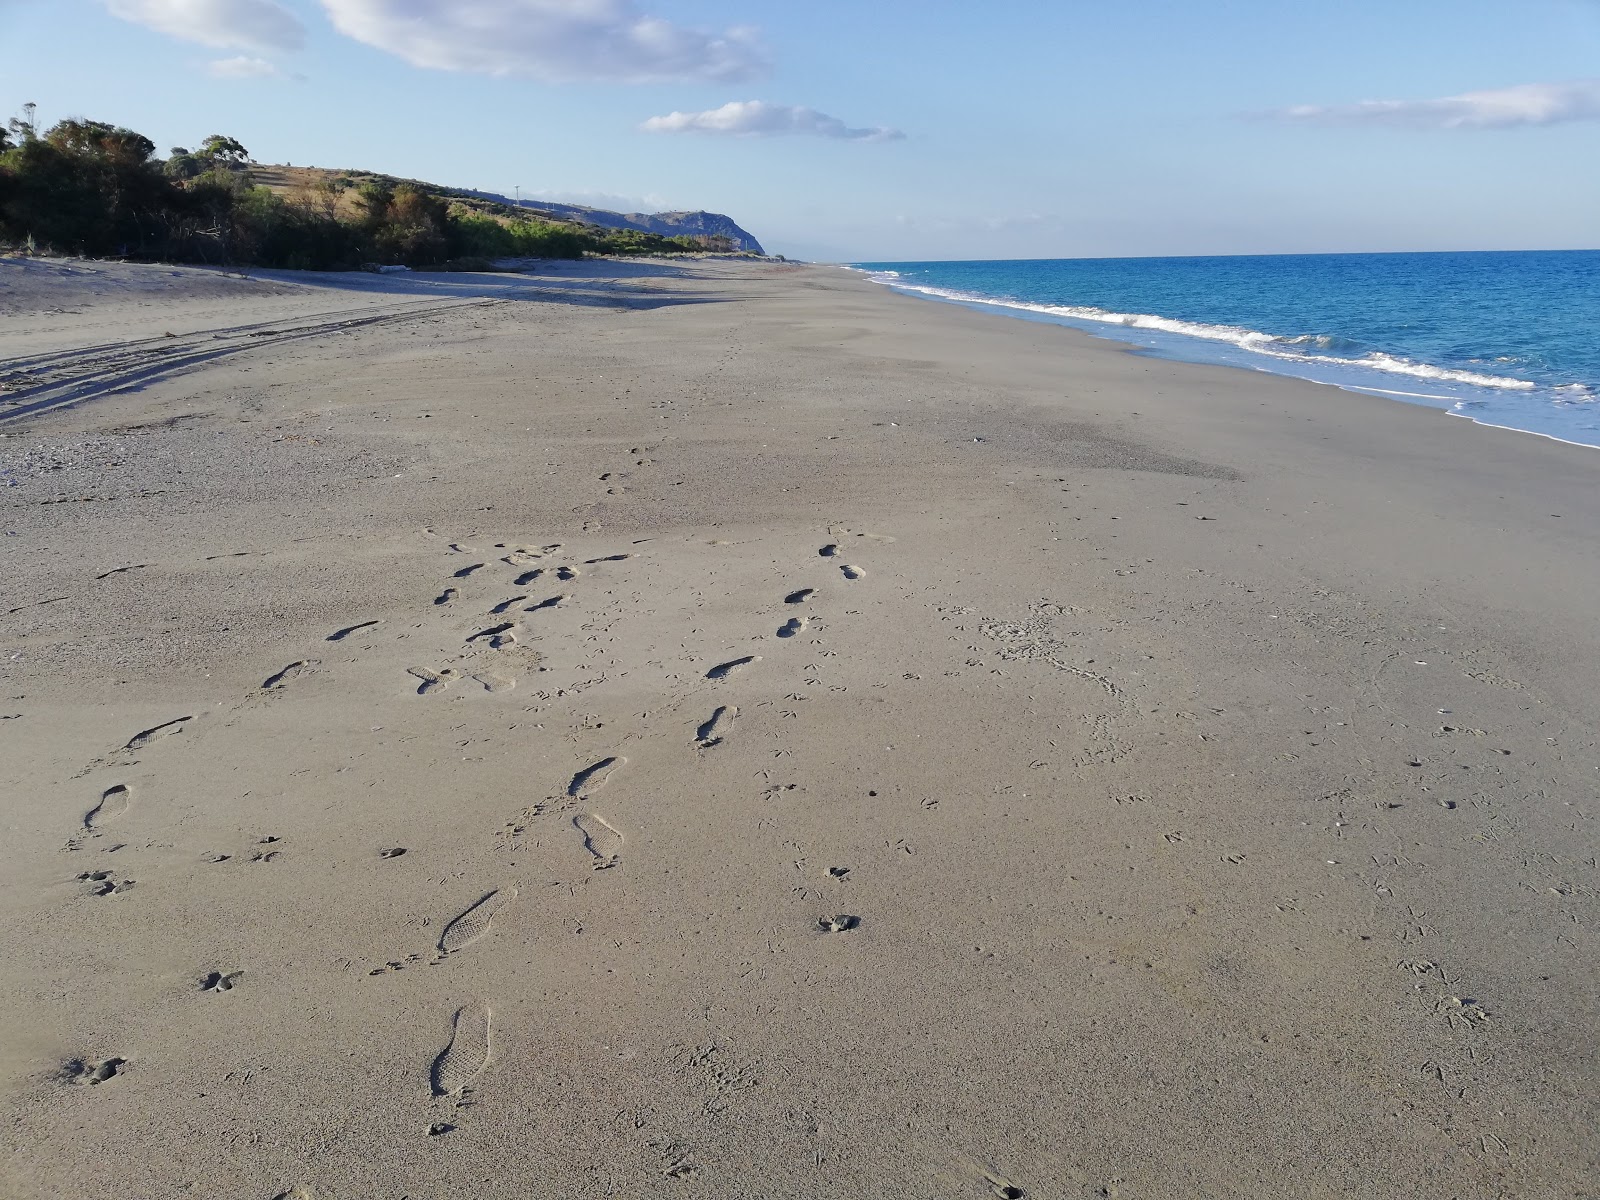 Foto af Spiaggia dello Scoglio Cuzzufri med grå sand overflade